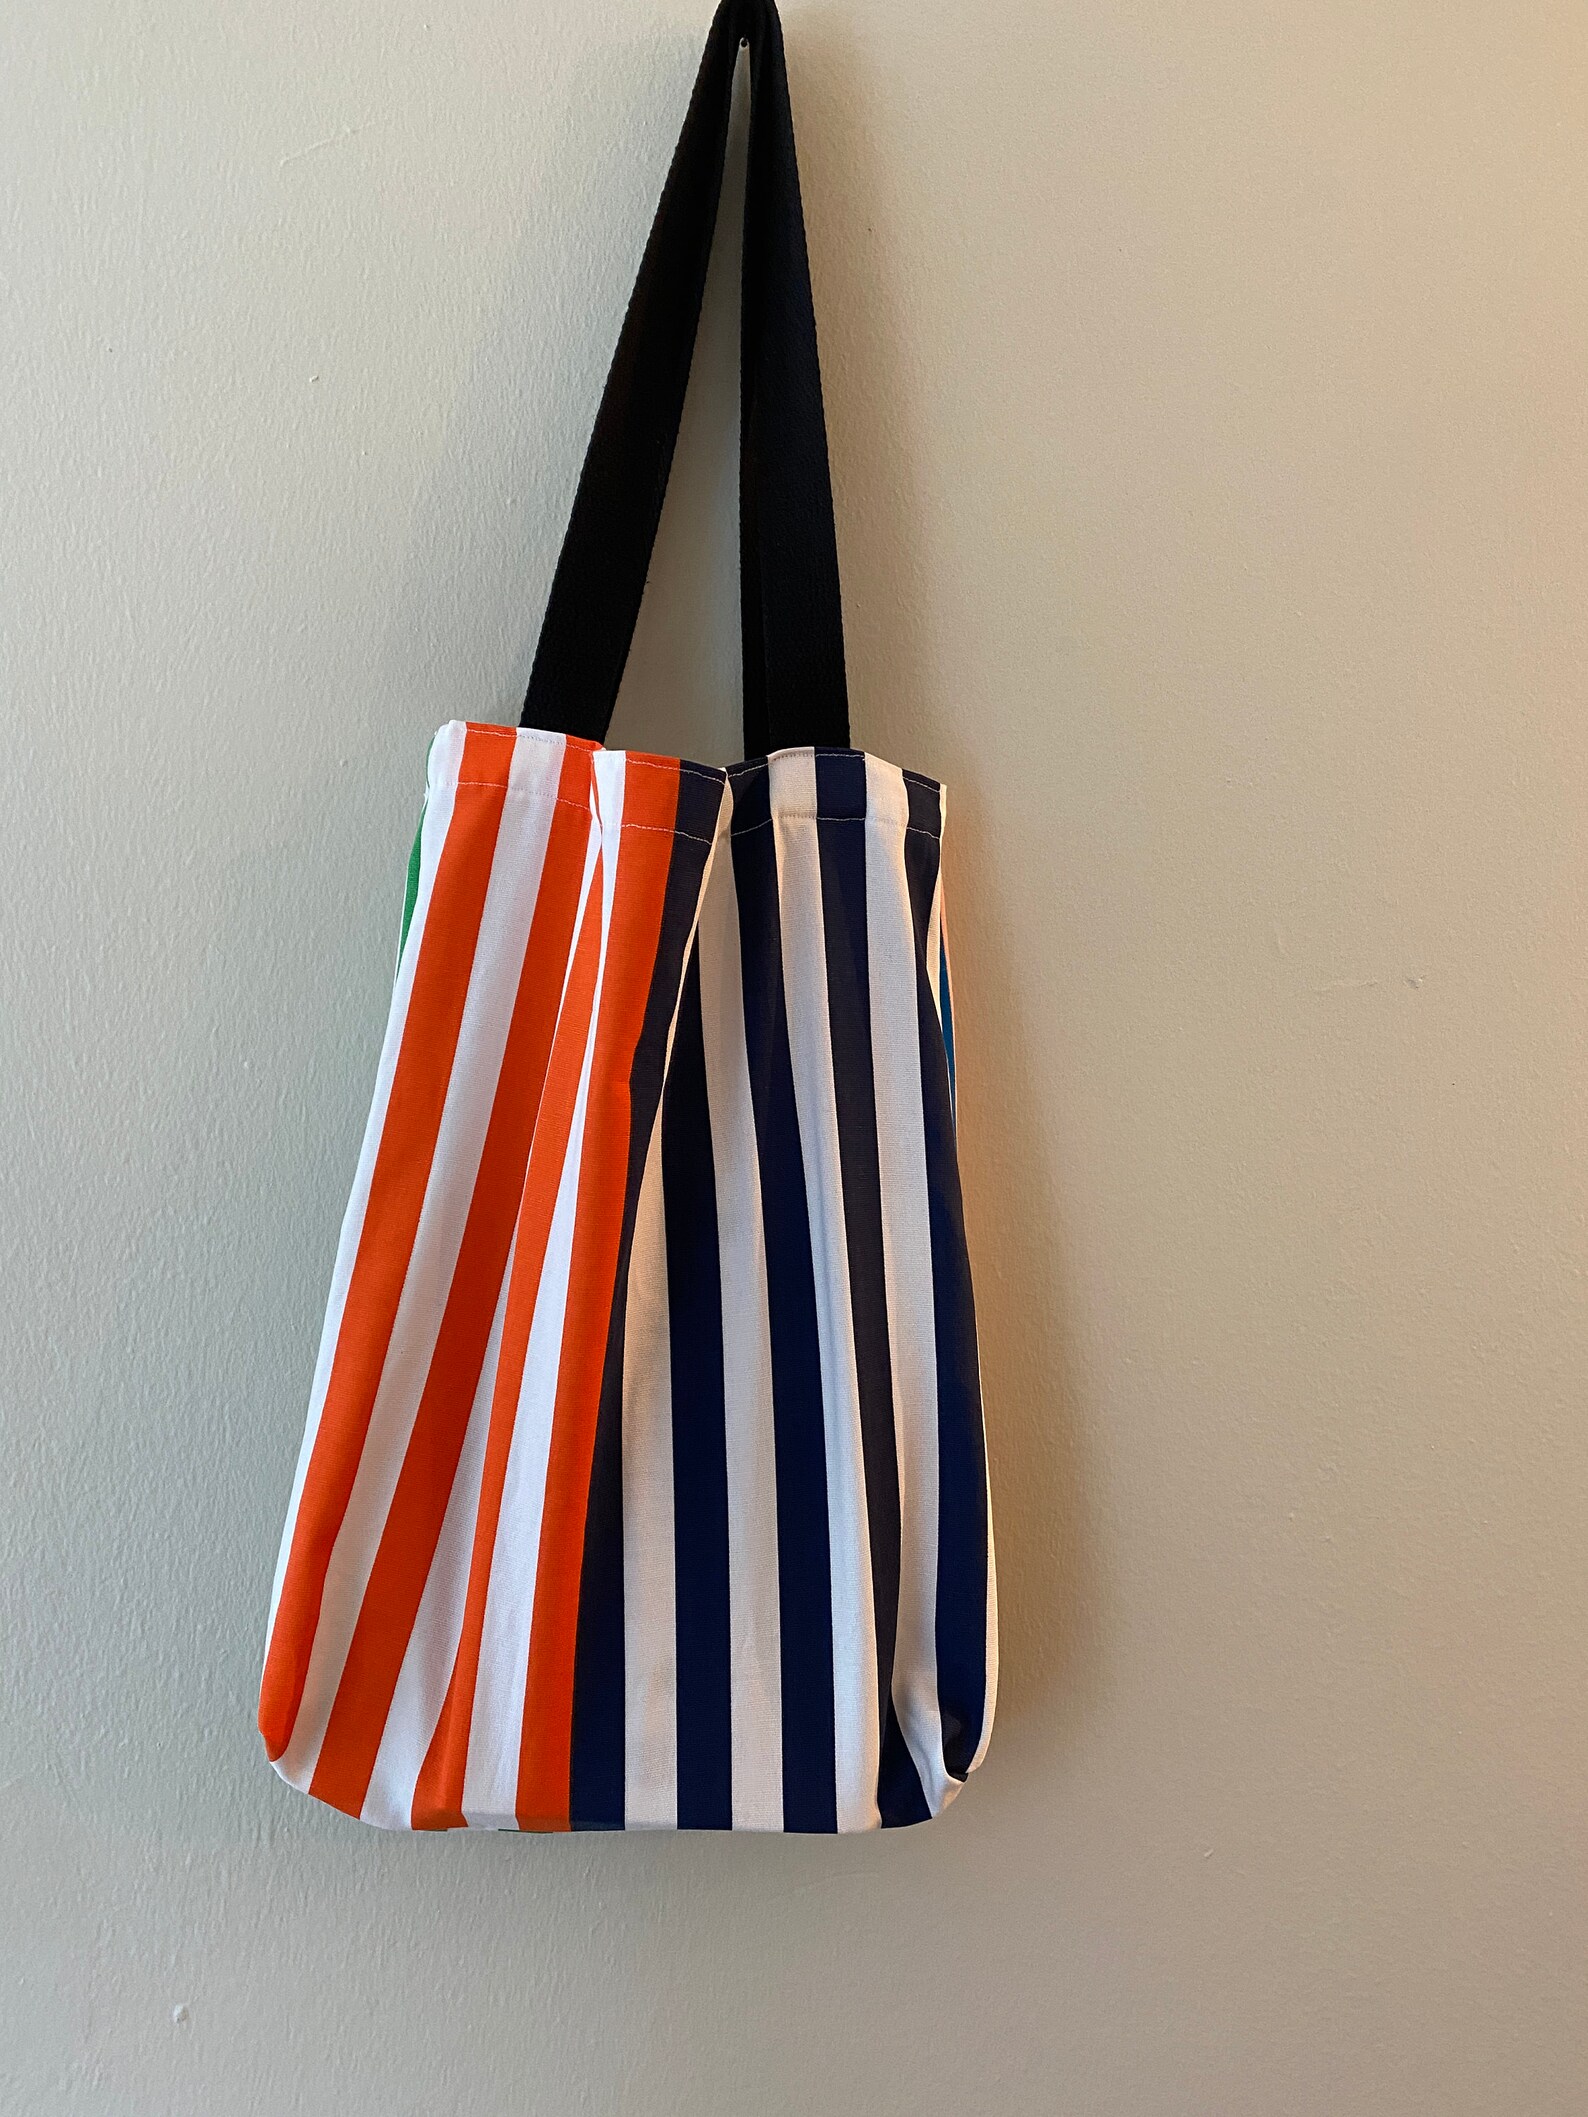 Handmade Tote bag IKEA Fabric Tote bag Beautifully made | Etsy